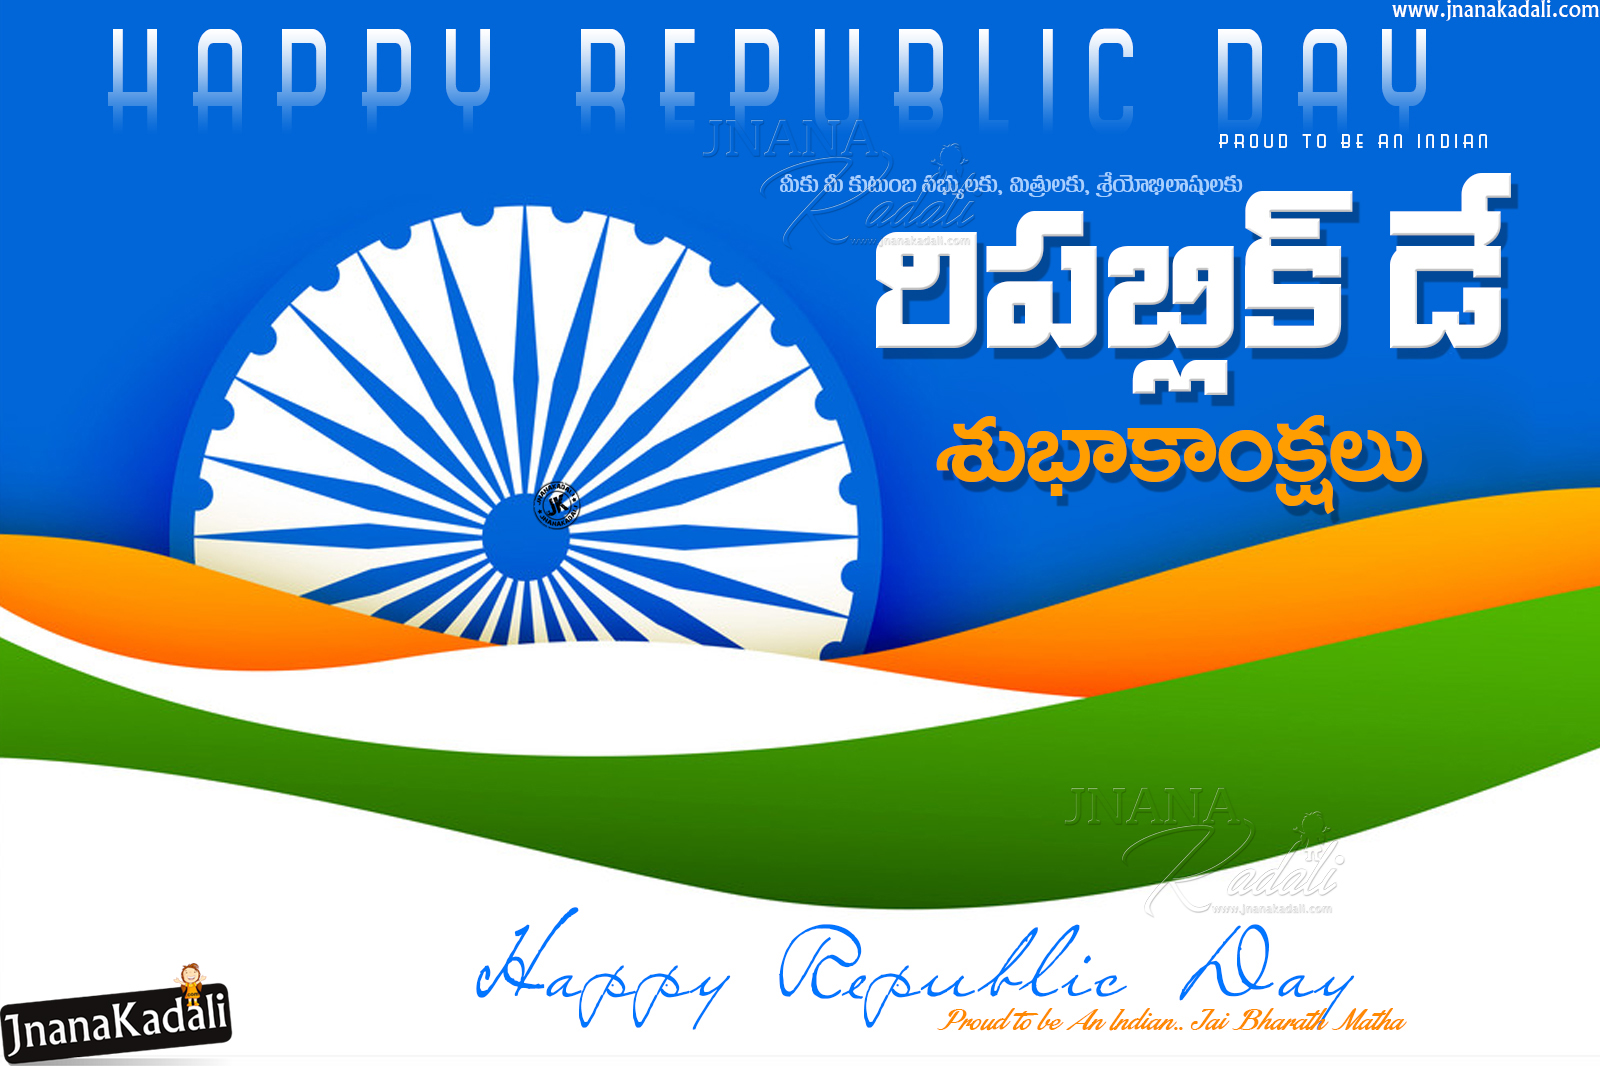 2020 Republic Day Greetings Wallpapers in Telugu Free Download ...